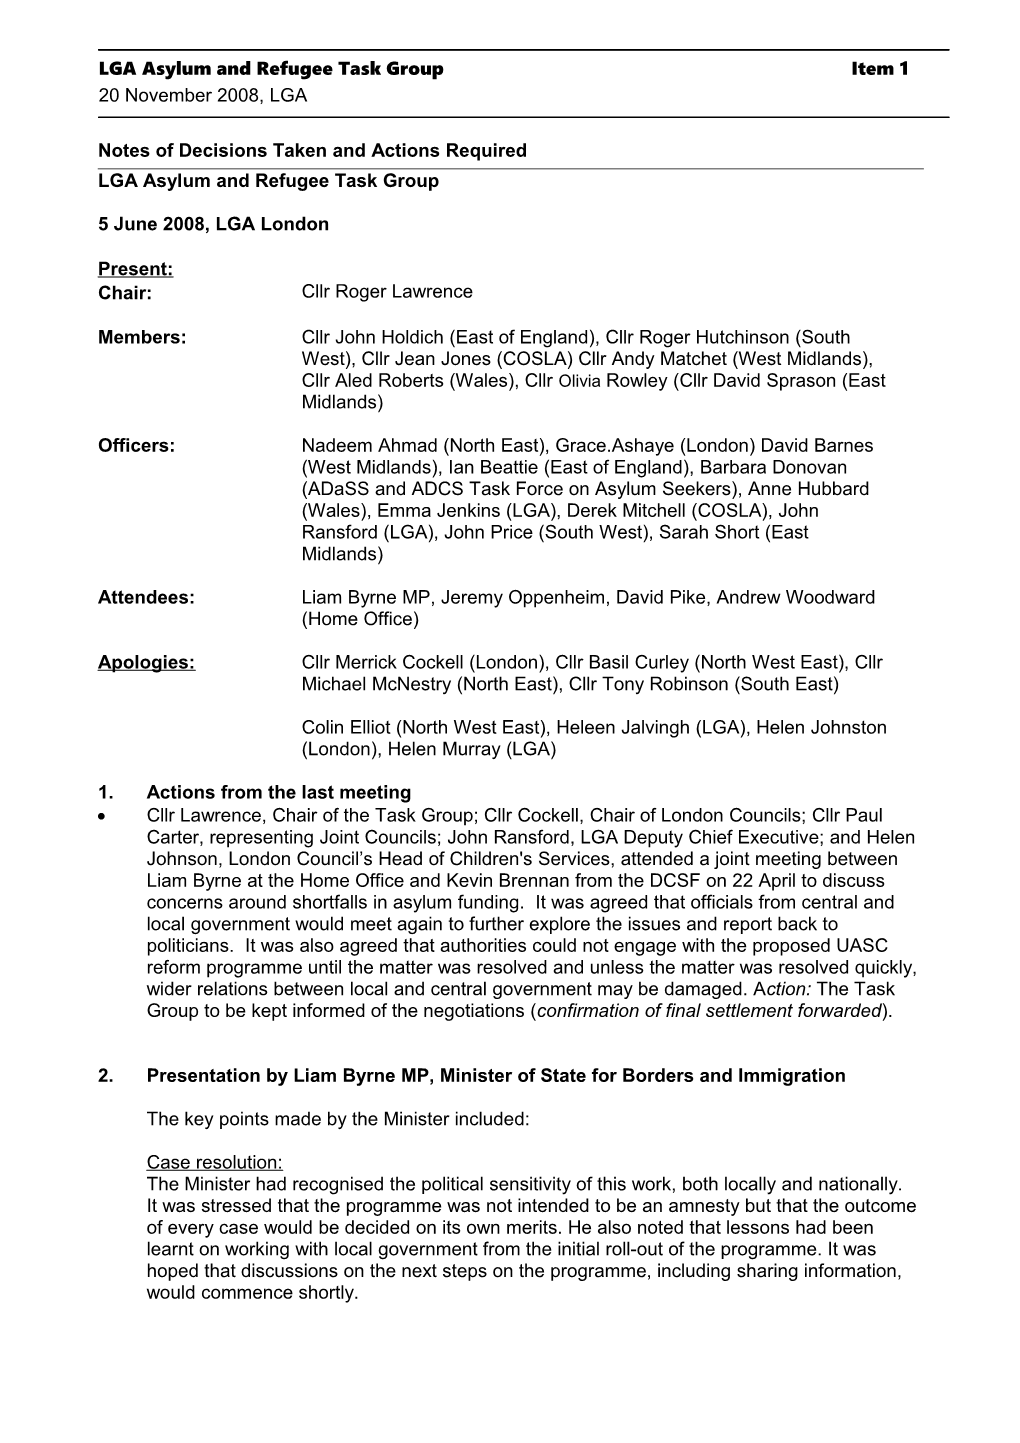 LGA Asylum Task Group 5 June 2008 Action Points